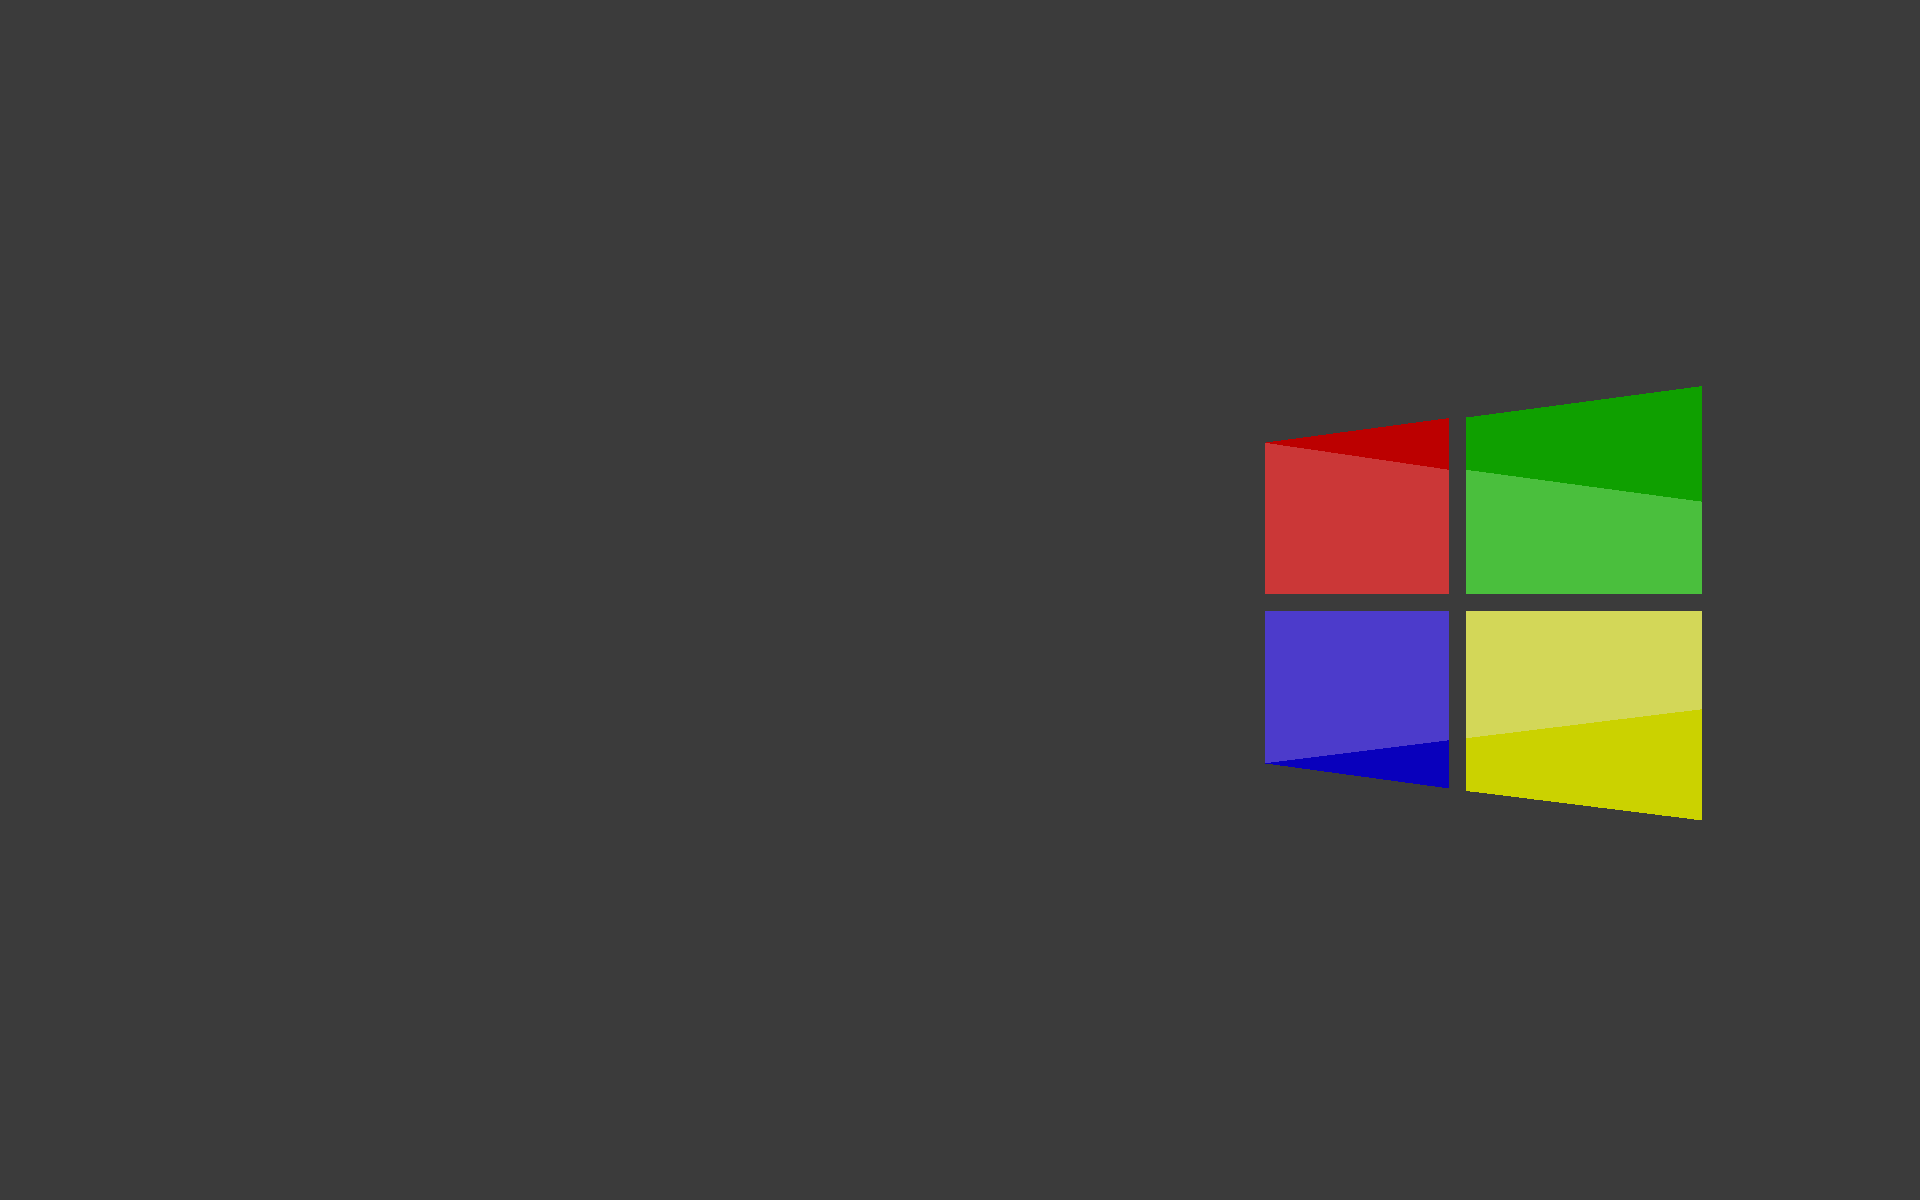 Old Windows Logo - The old Windows logo that I modernised